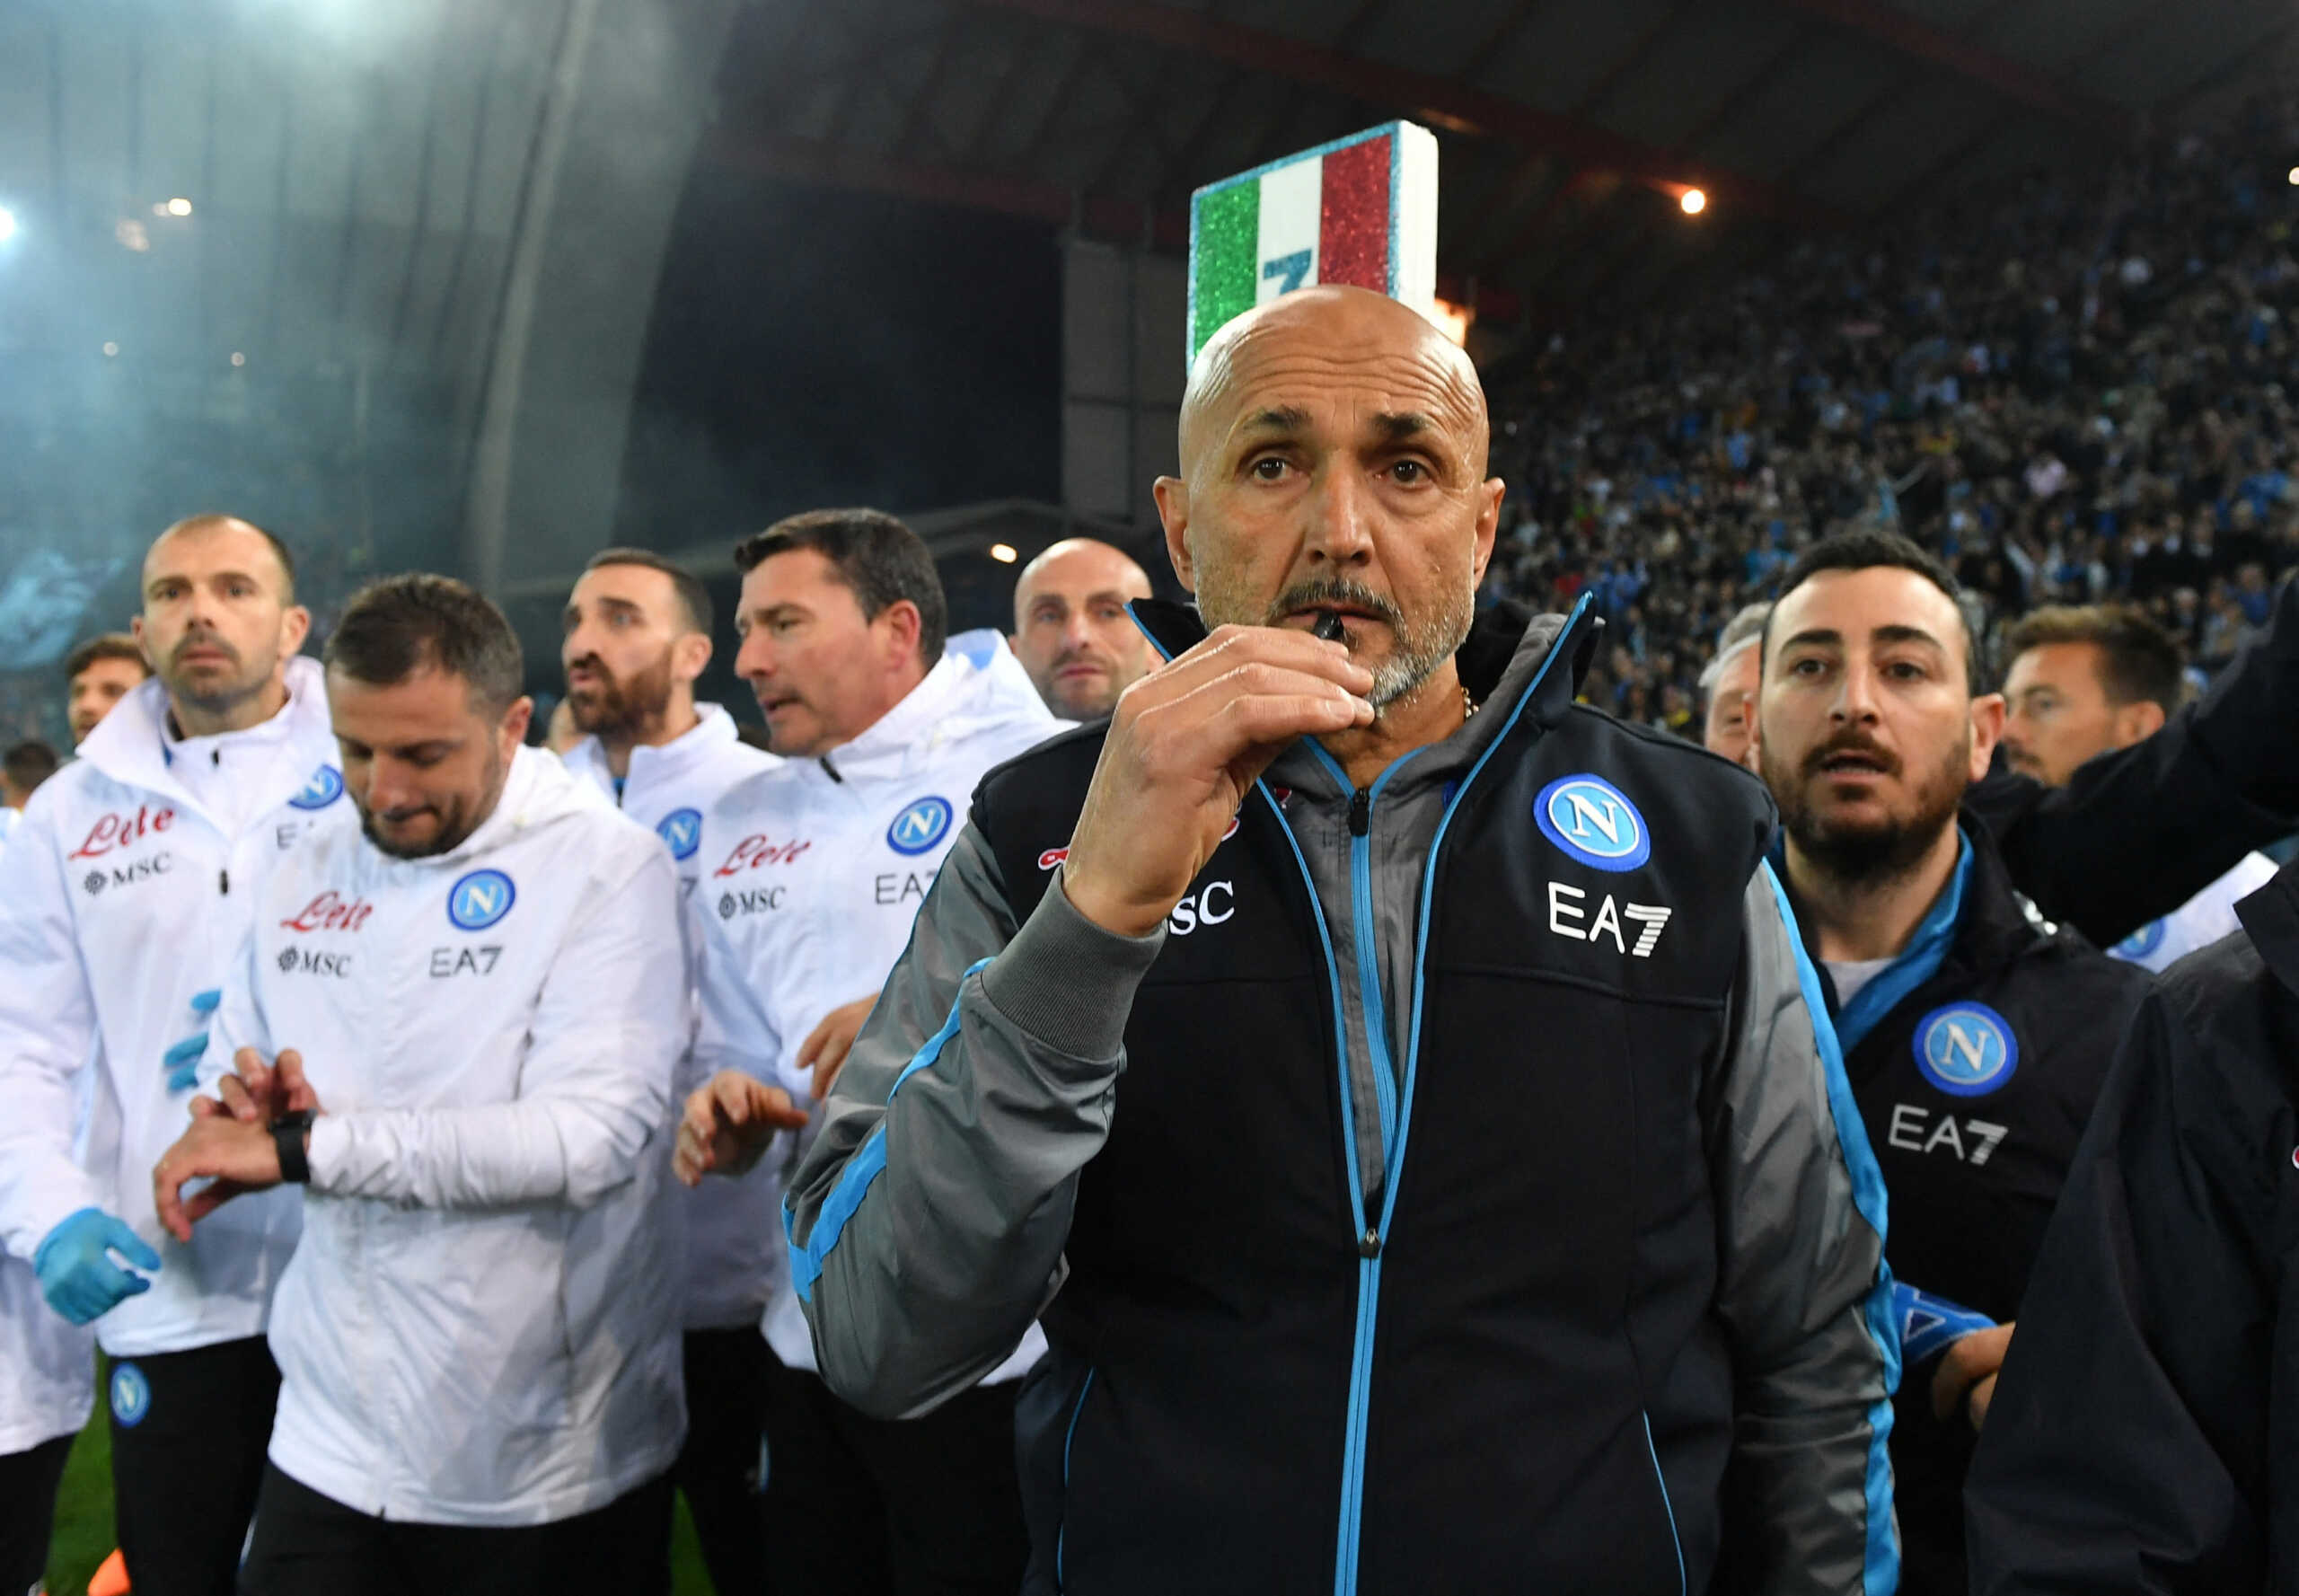 O Λουτσιάνο Σπαλέτι κάνει το ντεμπούτο ως προπονητής με την Εθνική Ιταλίας